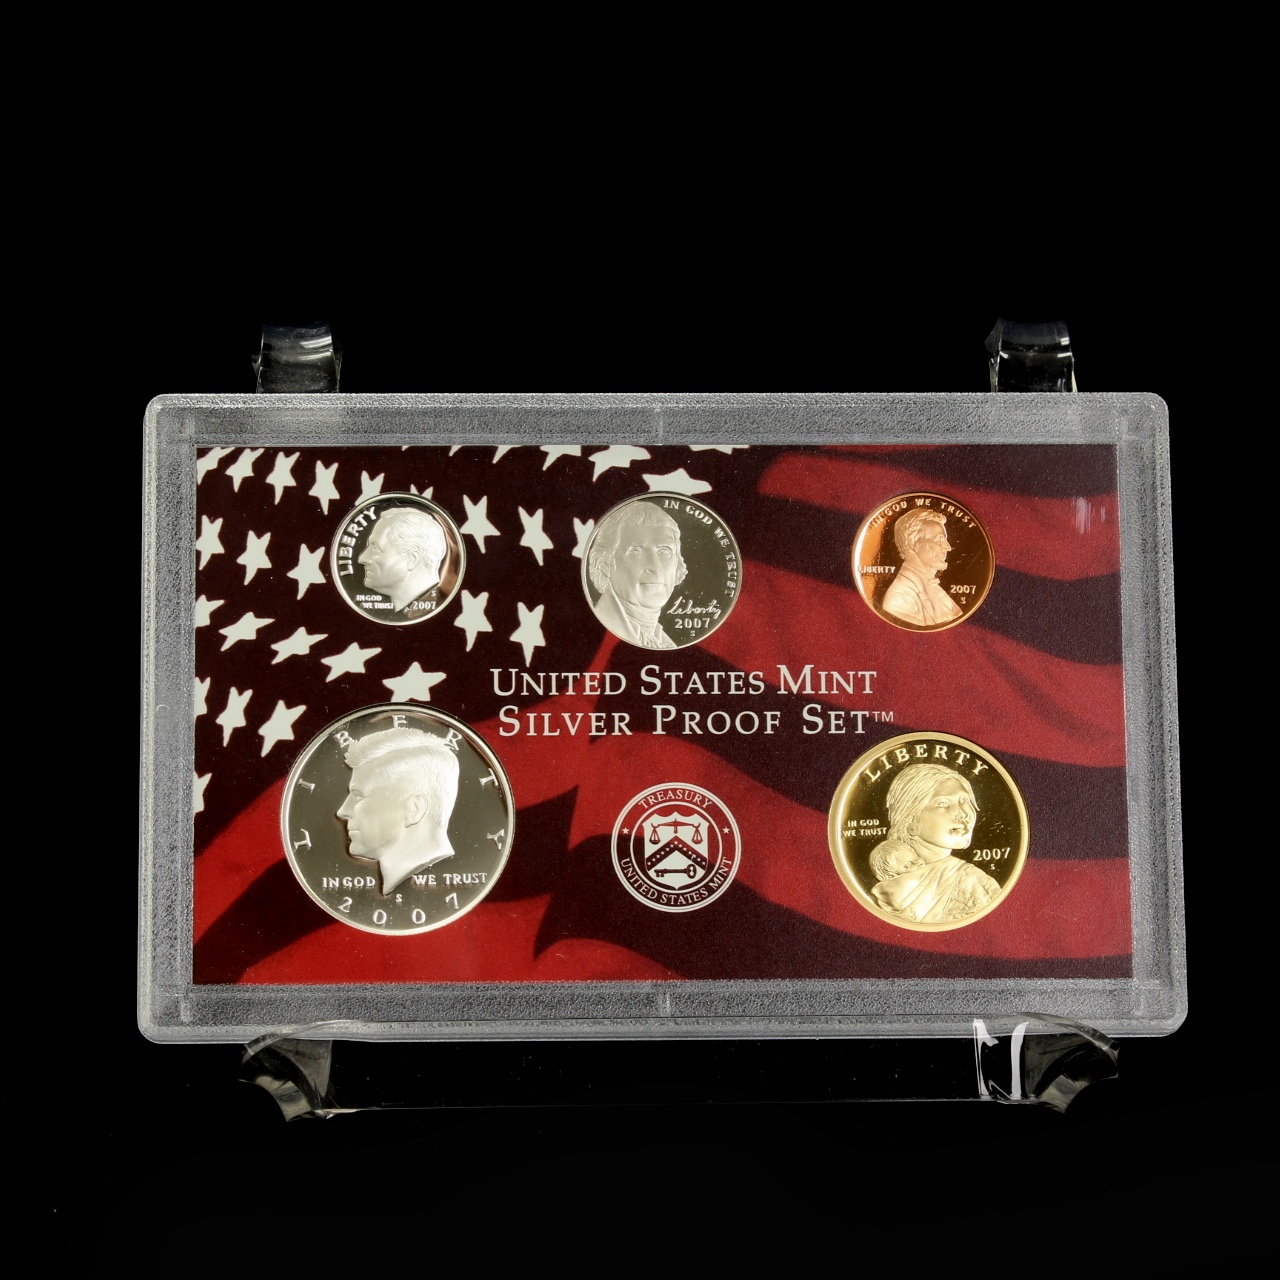 2007-S United States Mint Silver Proof Set, 50-State Quarter, $1 Presi